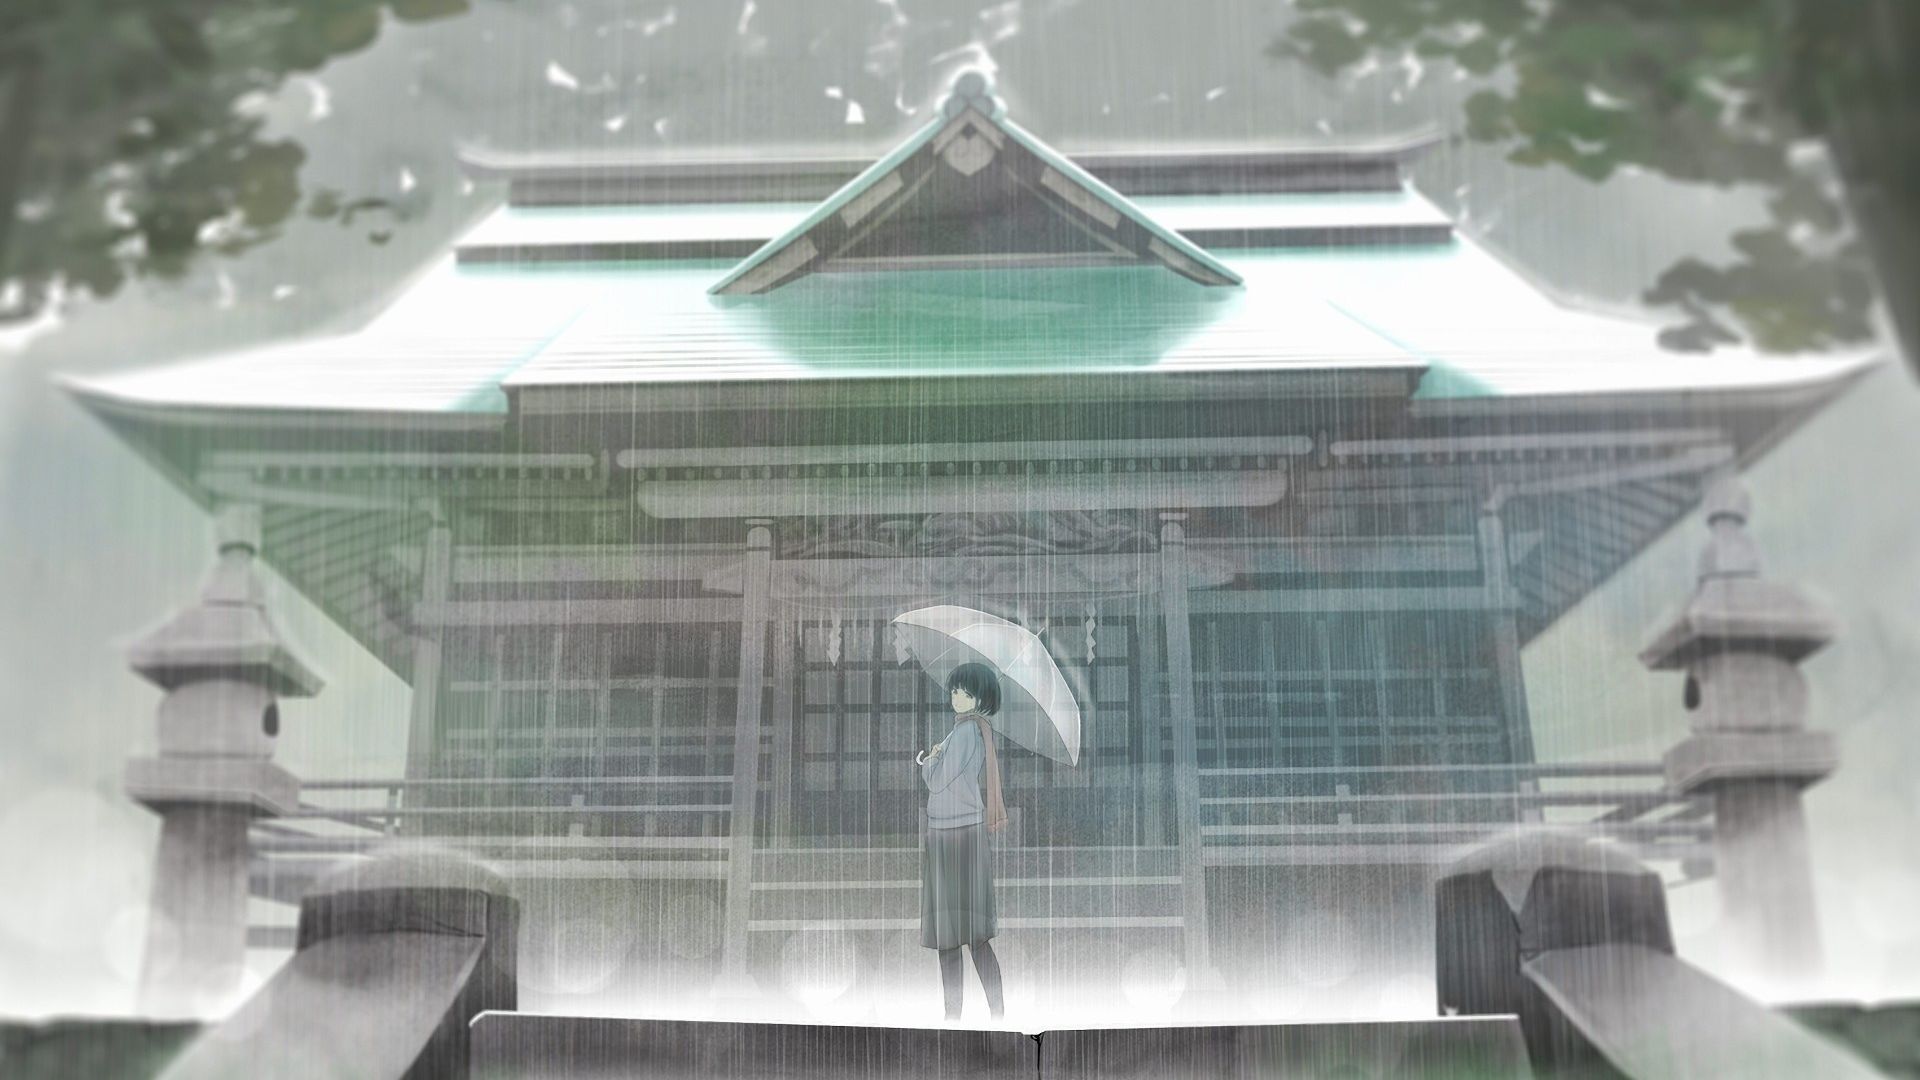 Desktop Wallpaper House Rain Anime Girl Outdoor Hd Image Picture Background 2d48